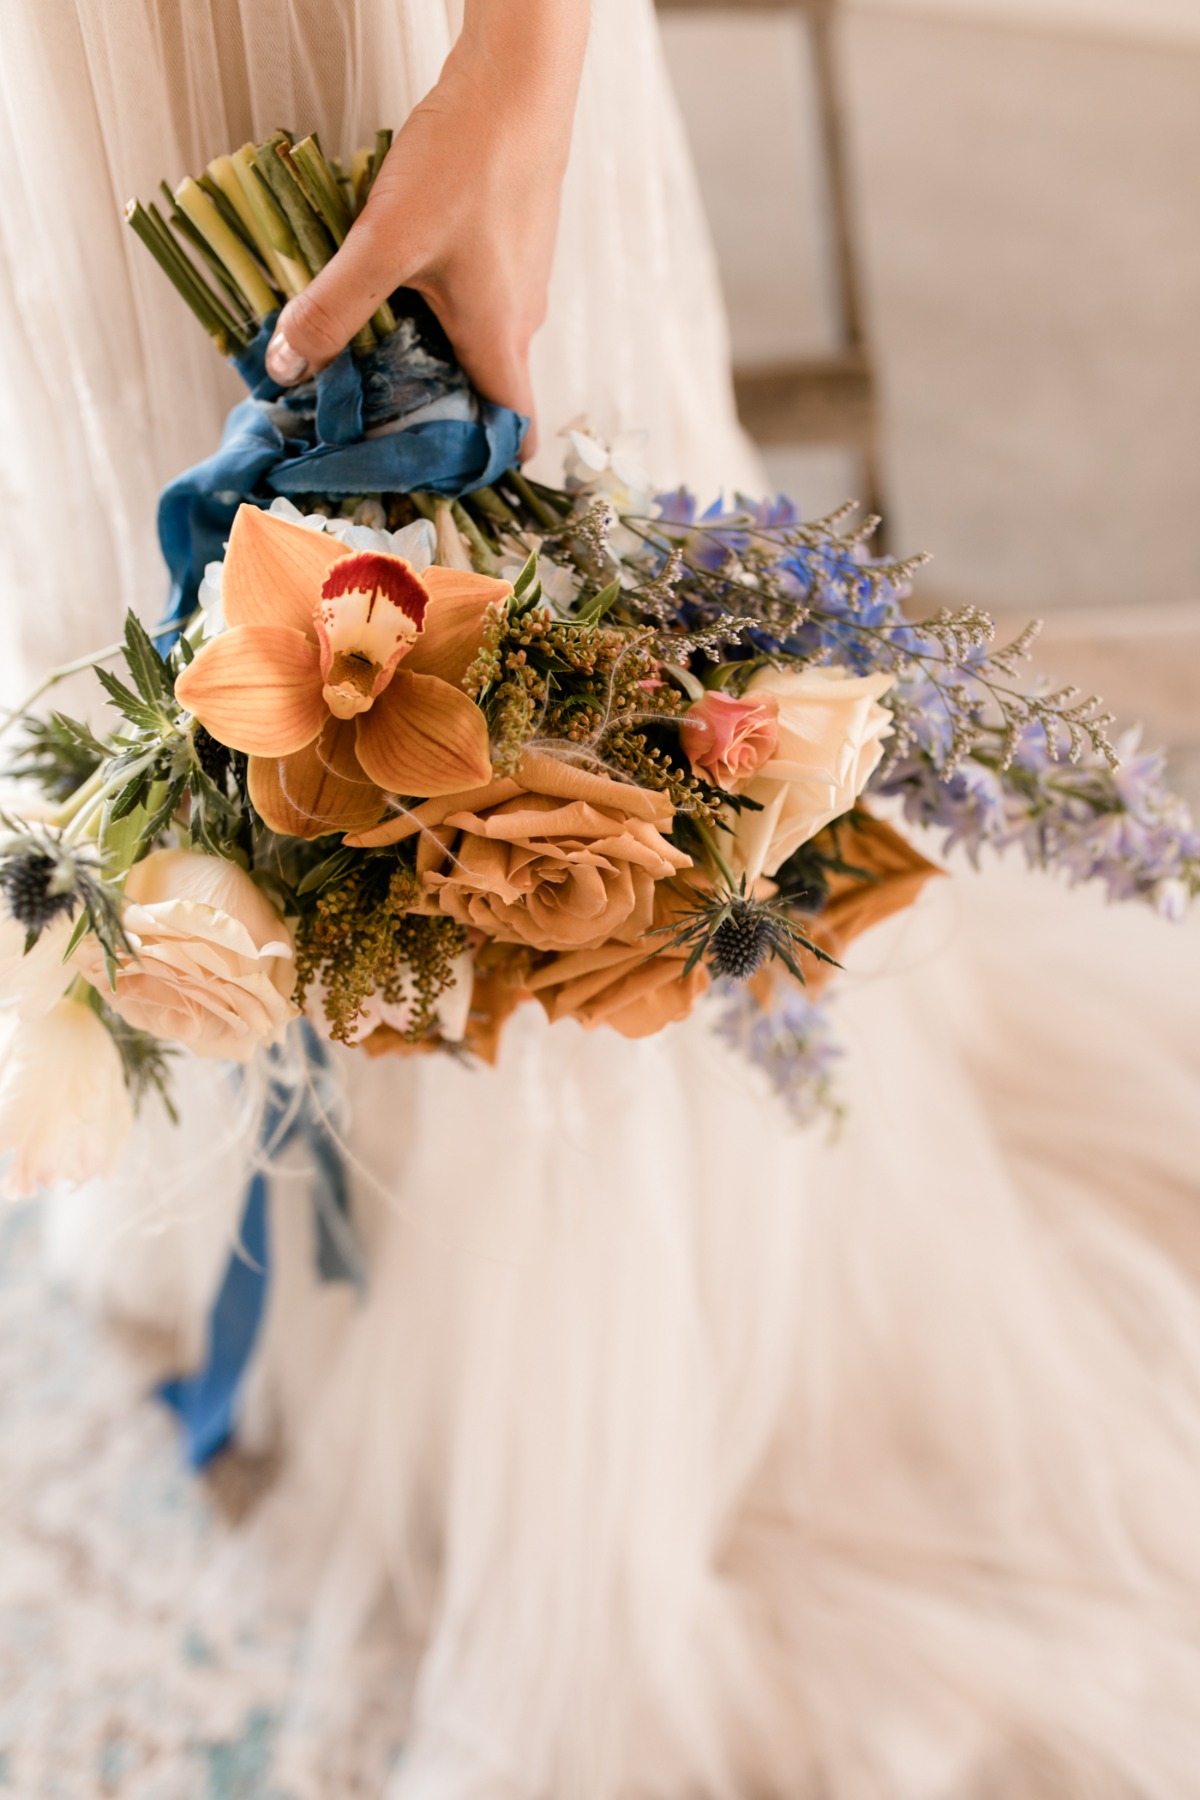 whimsical blue, orange and white wedding bouquet by Flourish & Knot